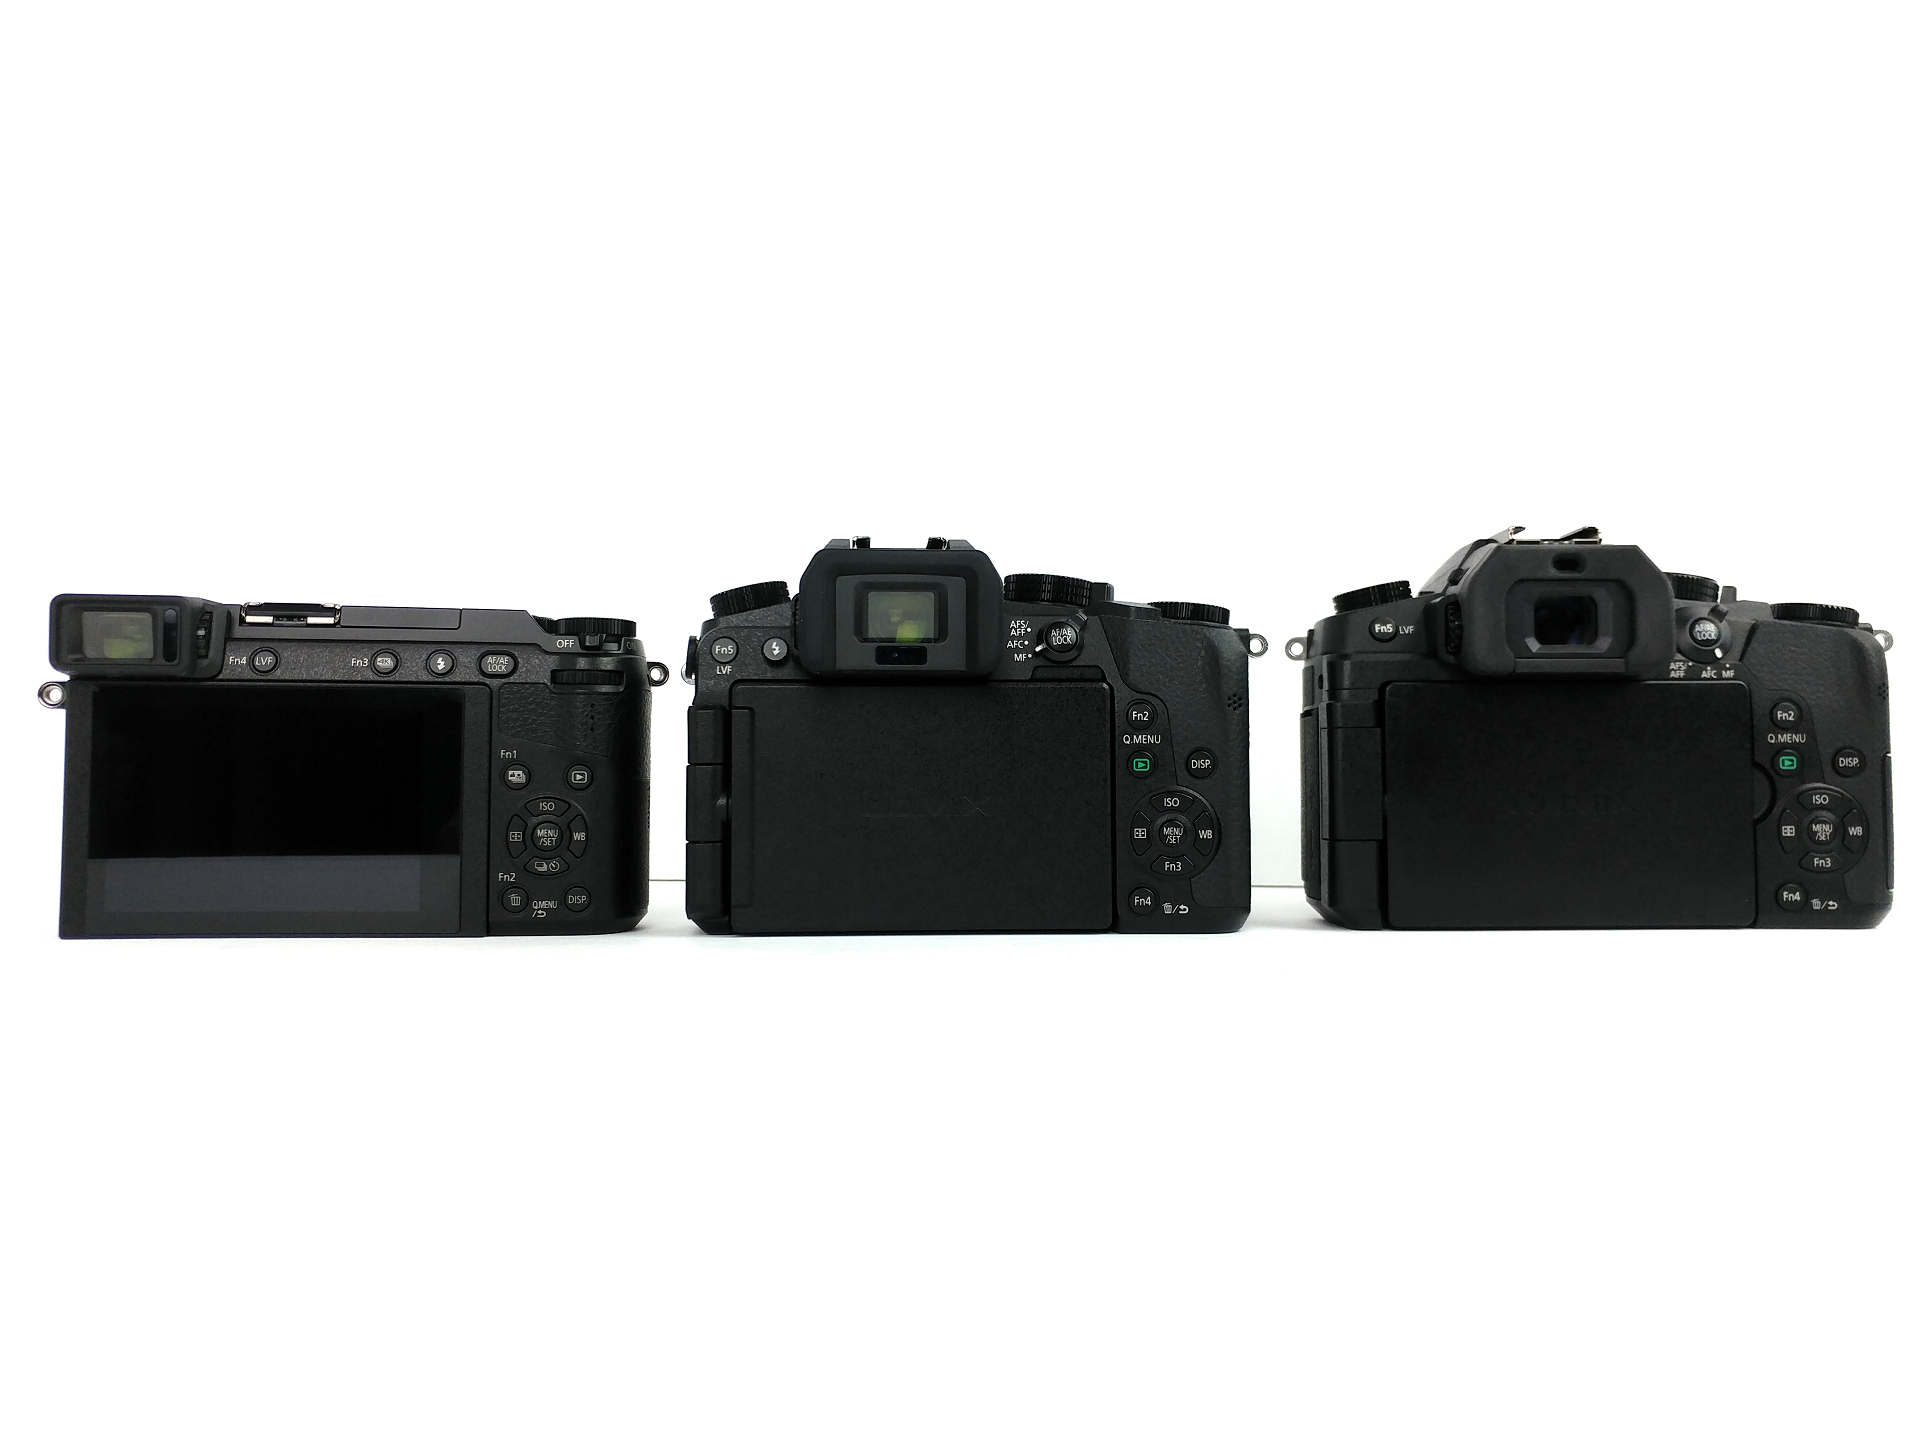 Panasonic Lumix G7, GX85, and G85 4K Camera